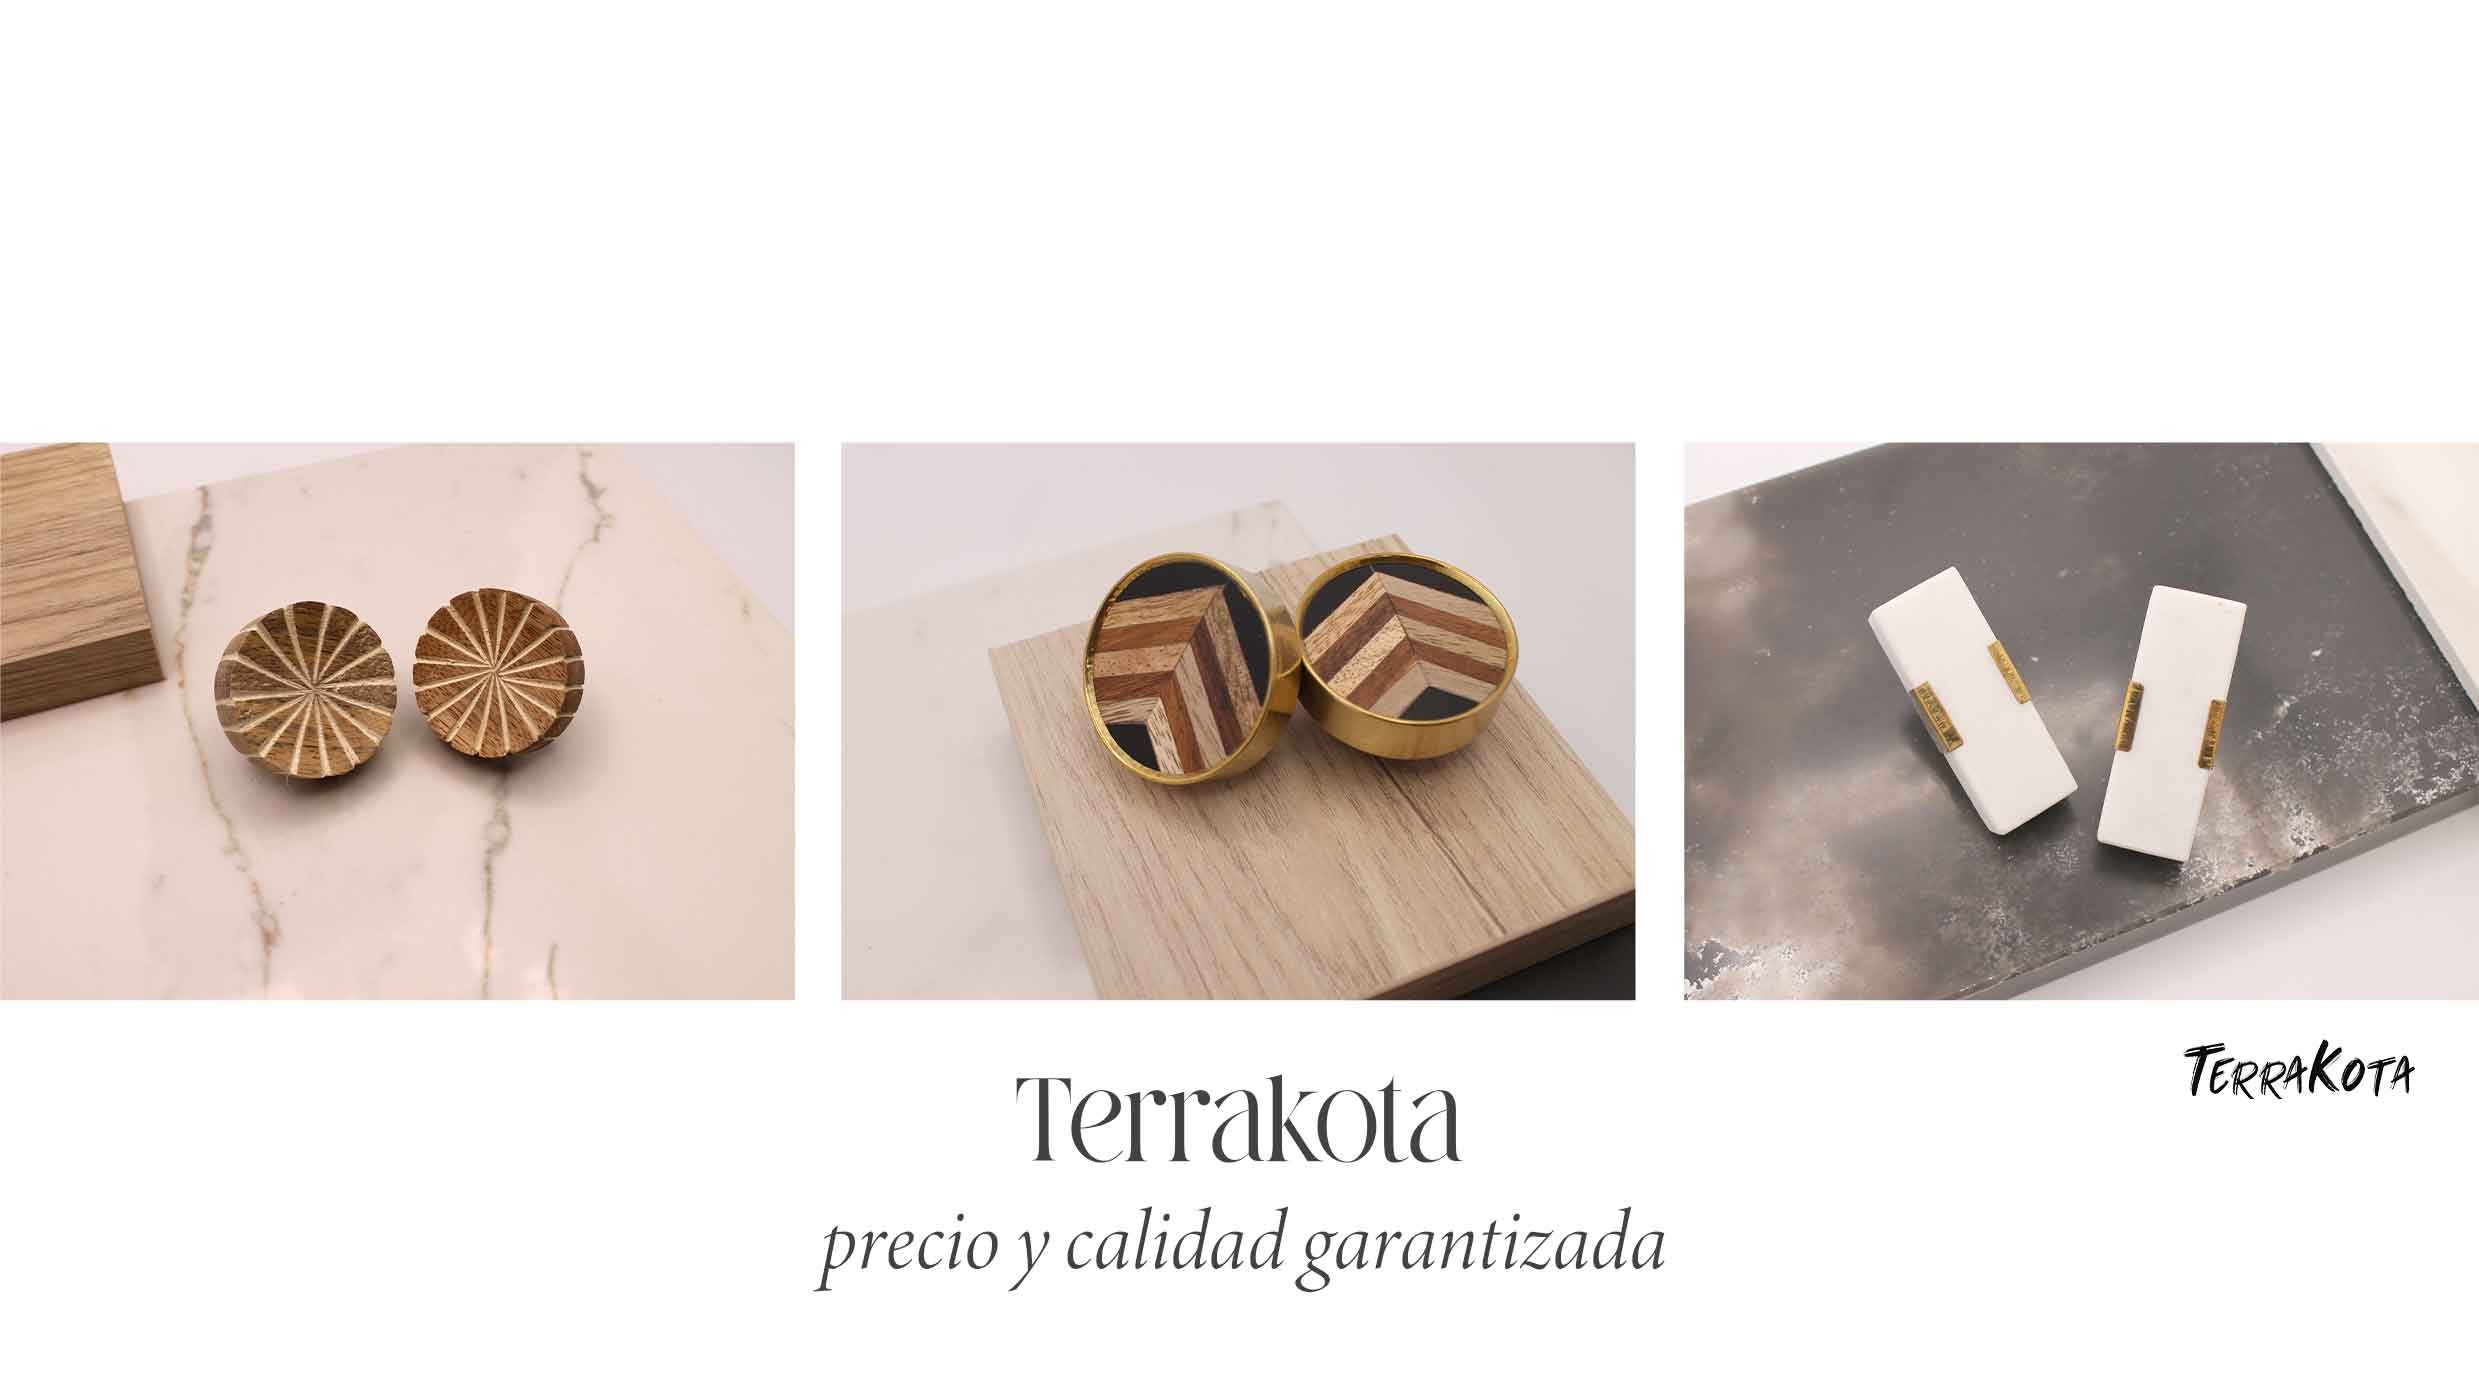 Productos Terrakota